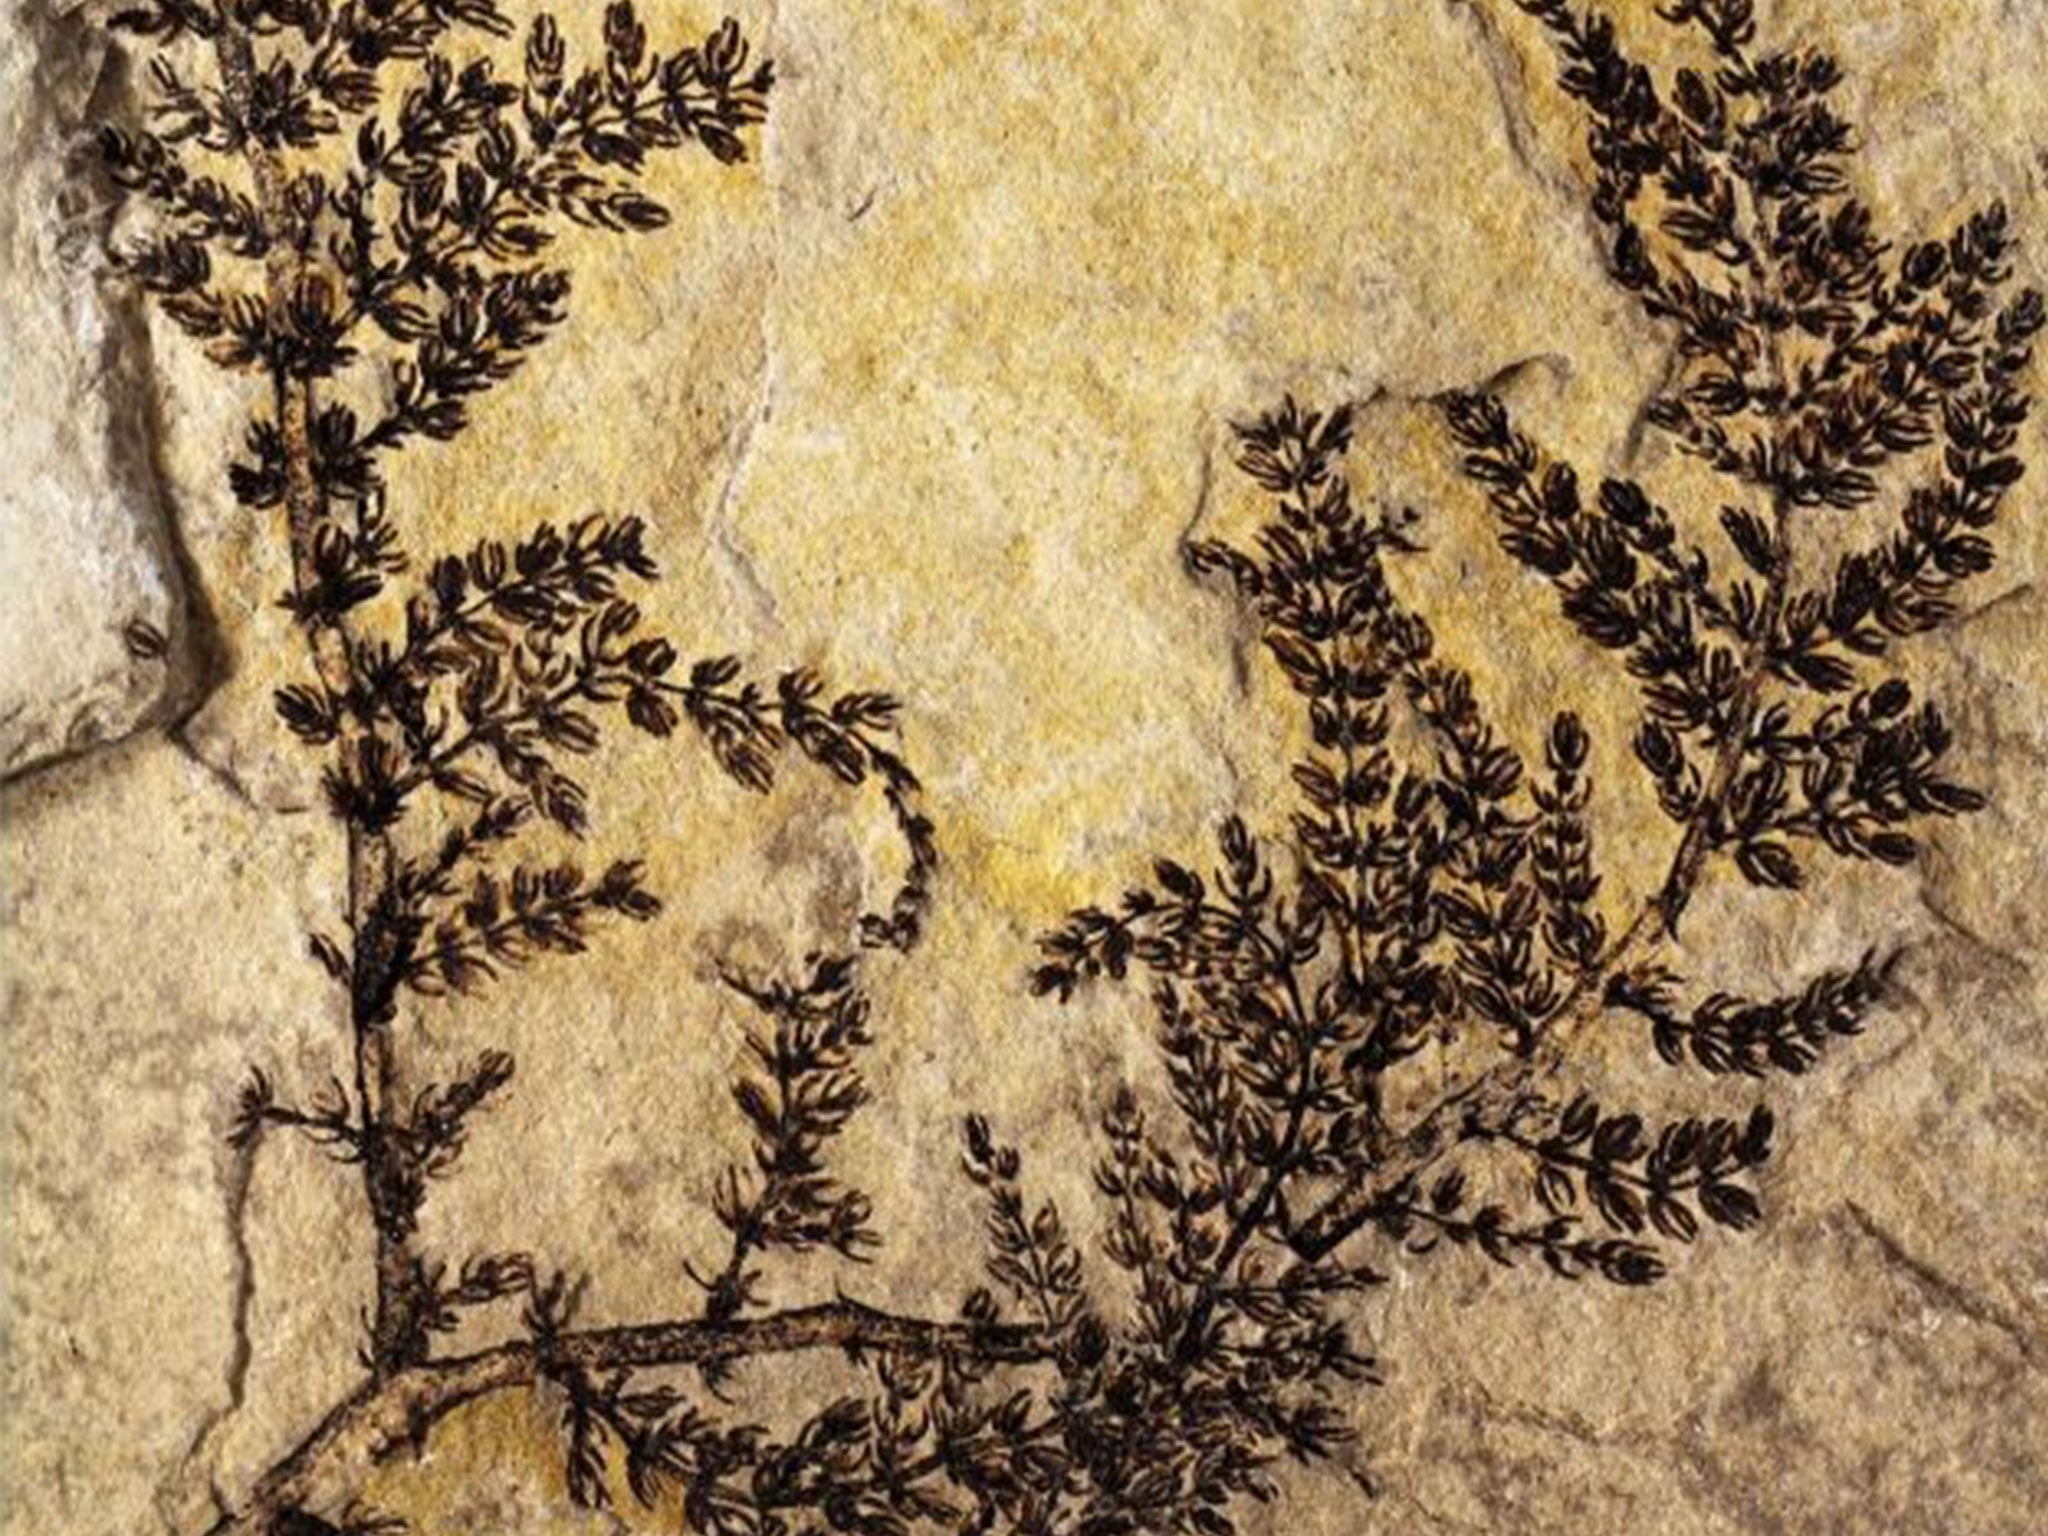 Montsechia vidalii, the world's oldest known "flower"